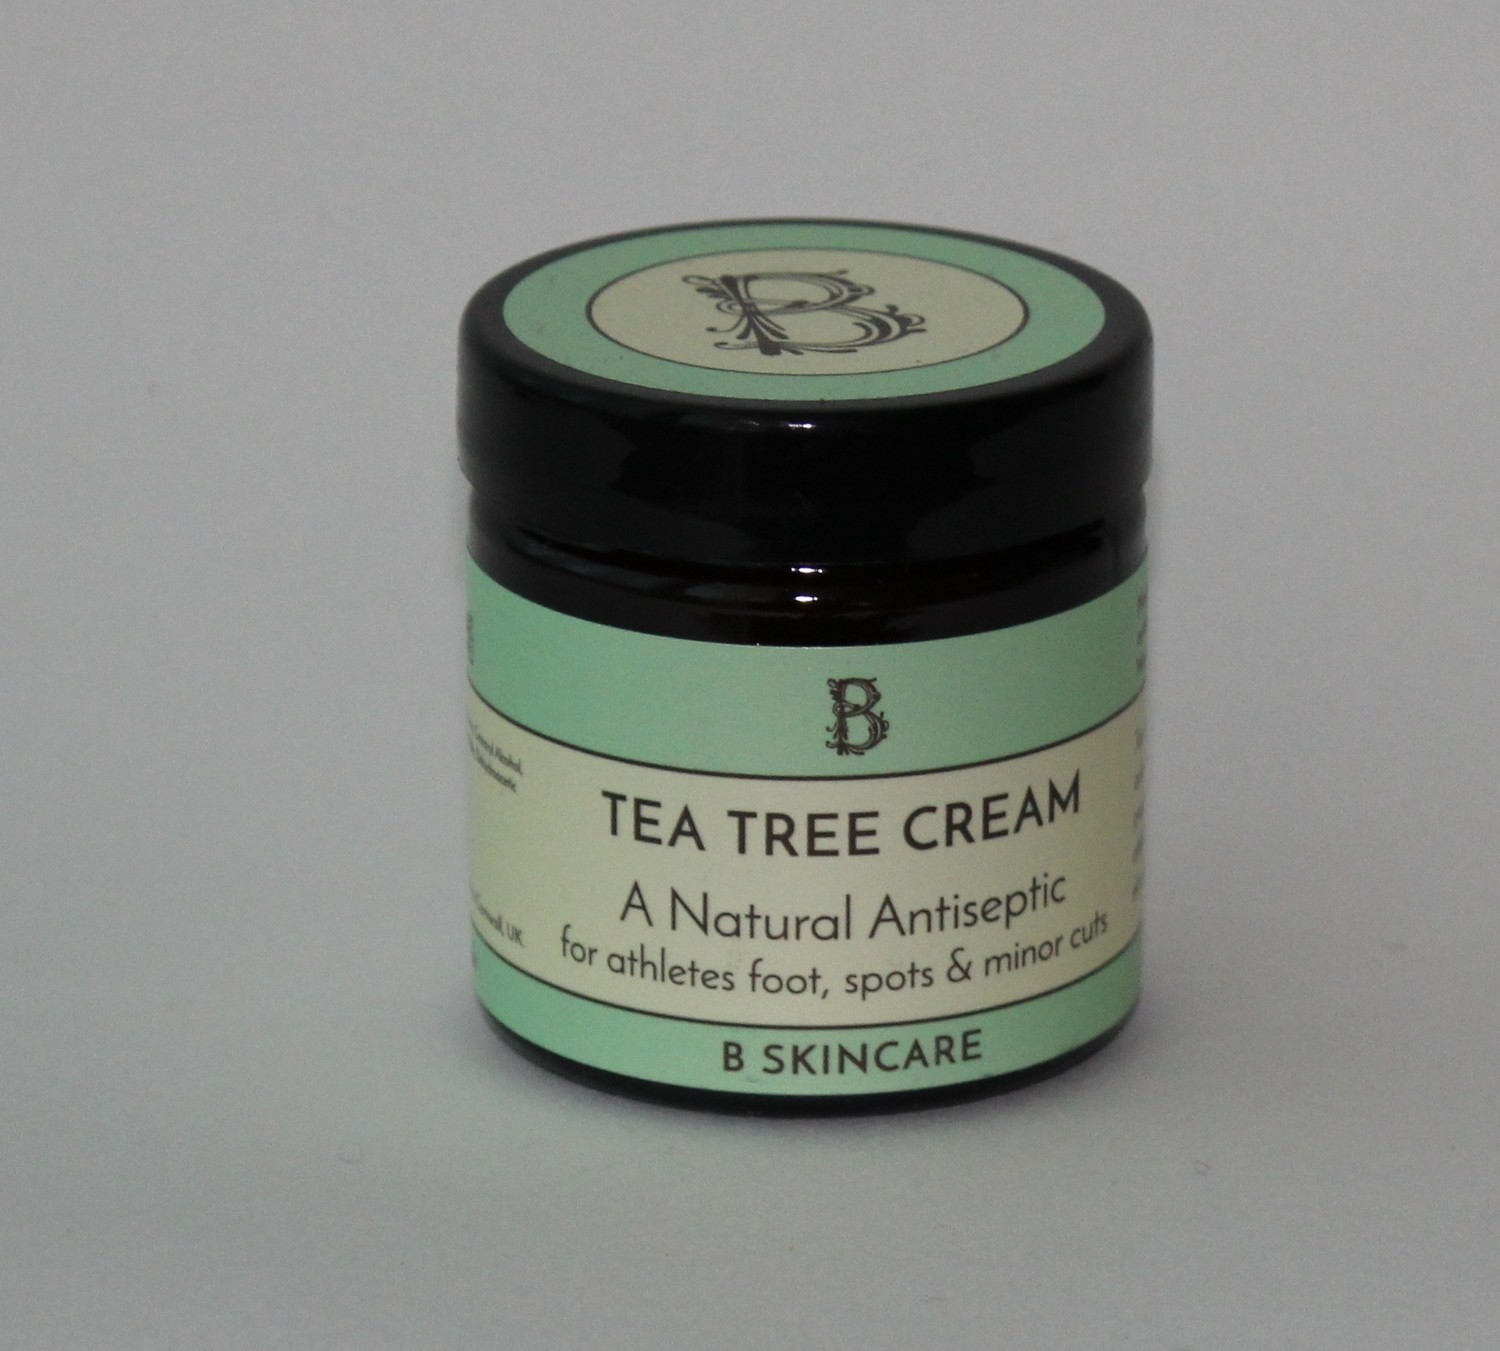 B Skincare Tea tree cream